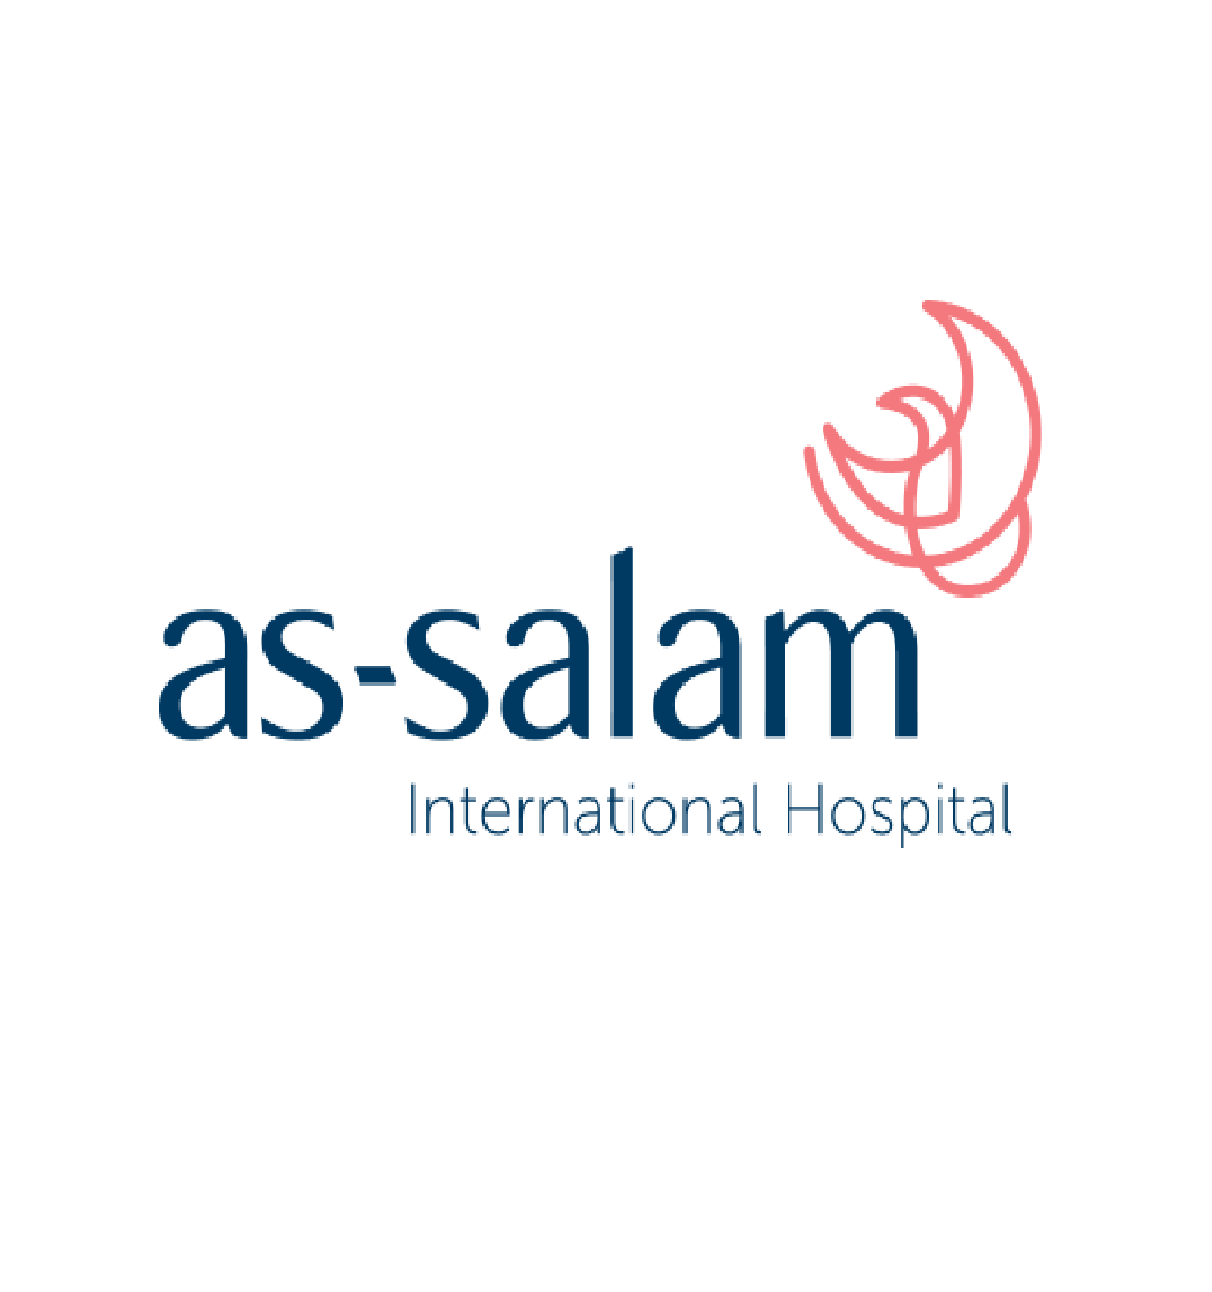 As-salam Hospital